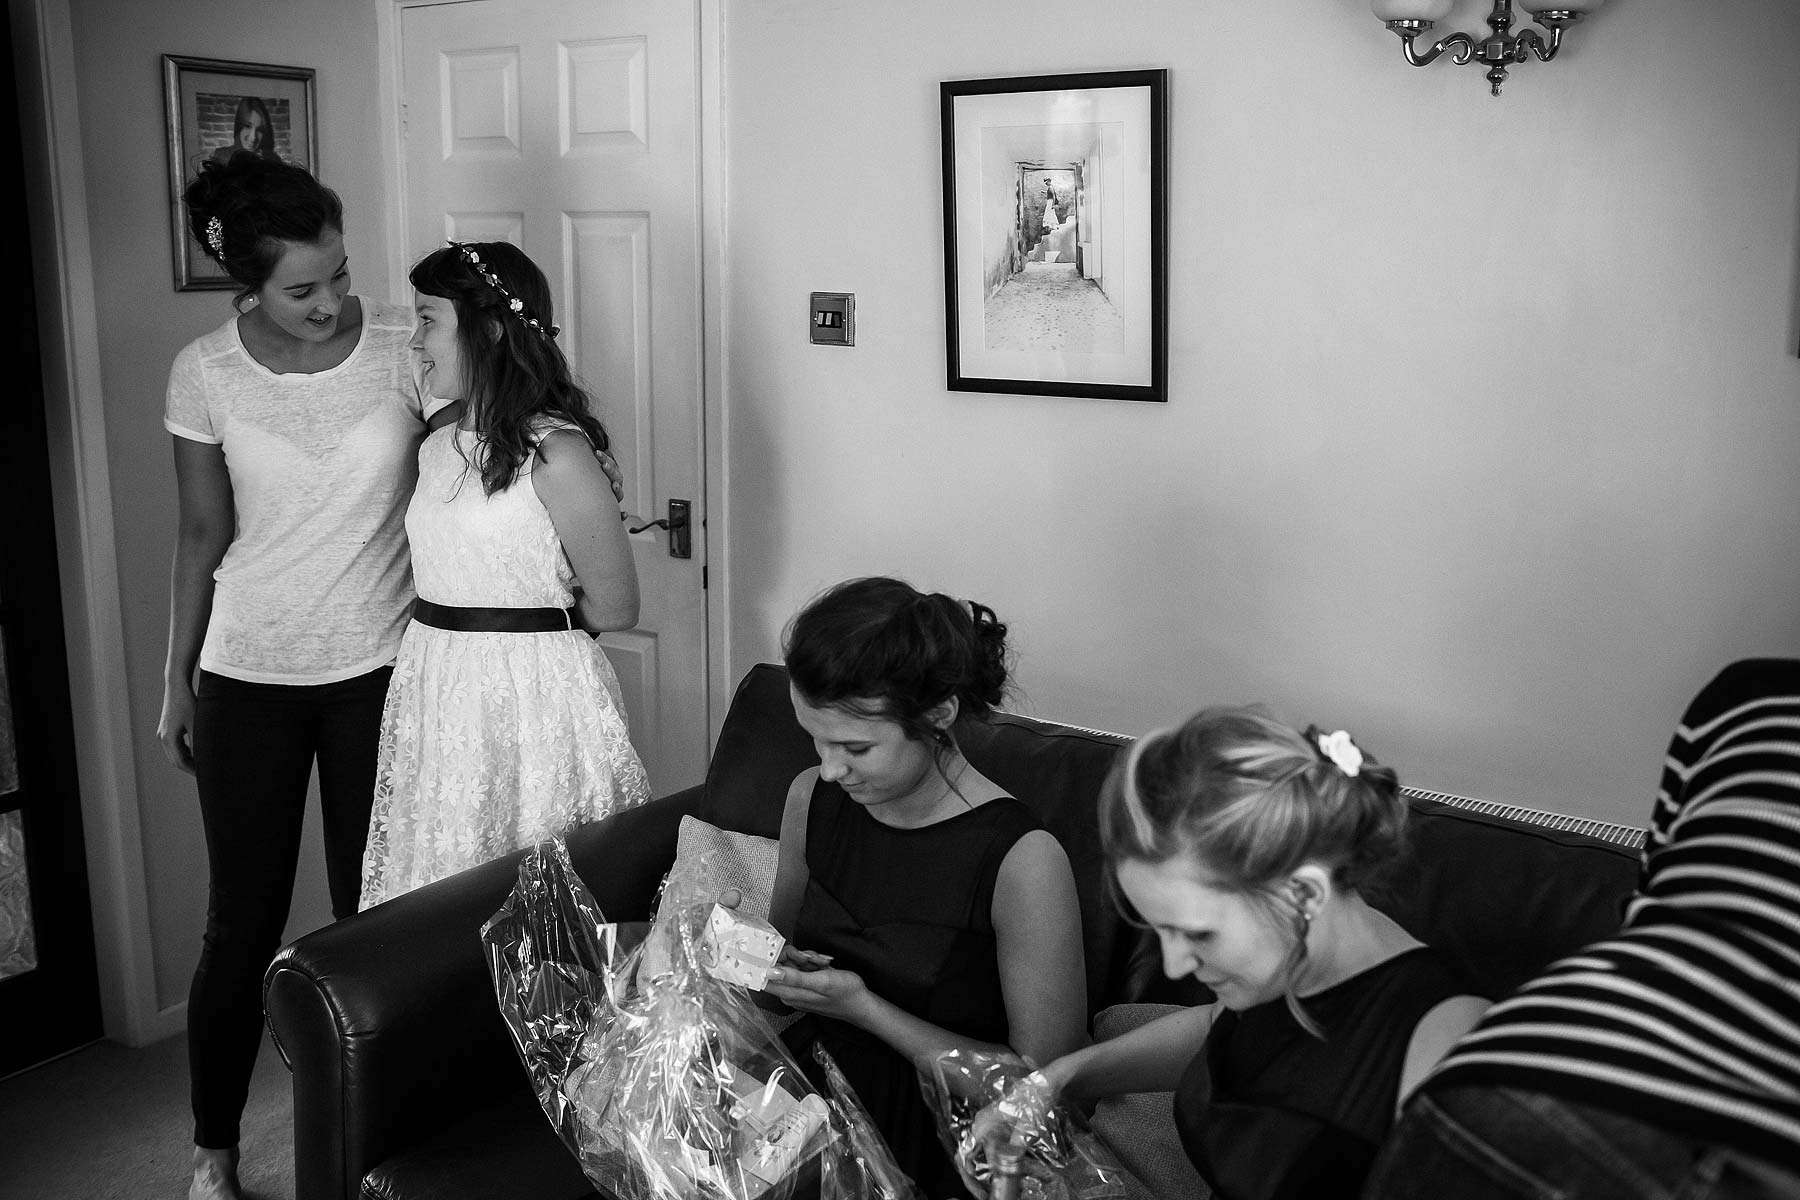 Documenting the wedding morning at Parents Home in Wolverhampton by Wolverhampton Documentary Wedding Photographer Stuart James